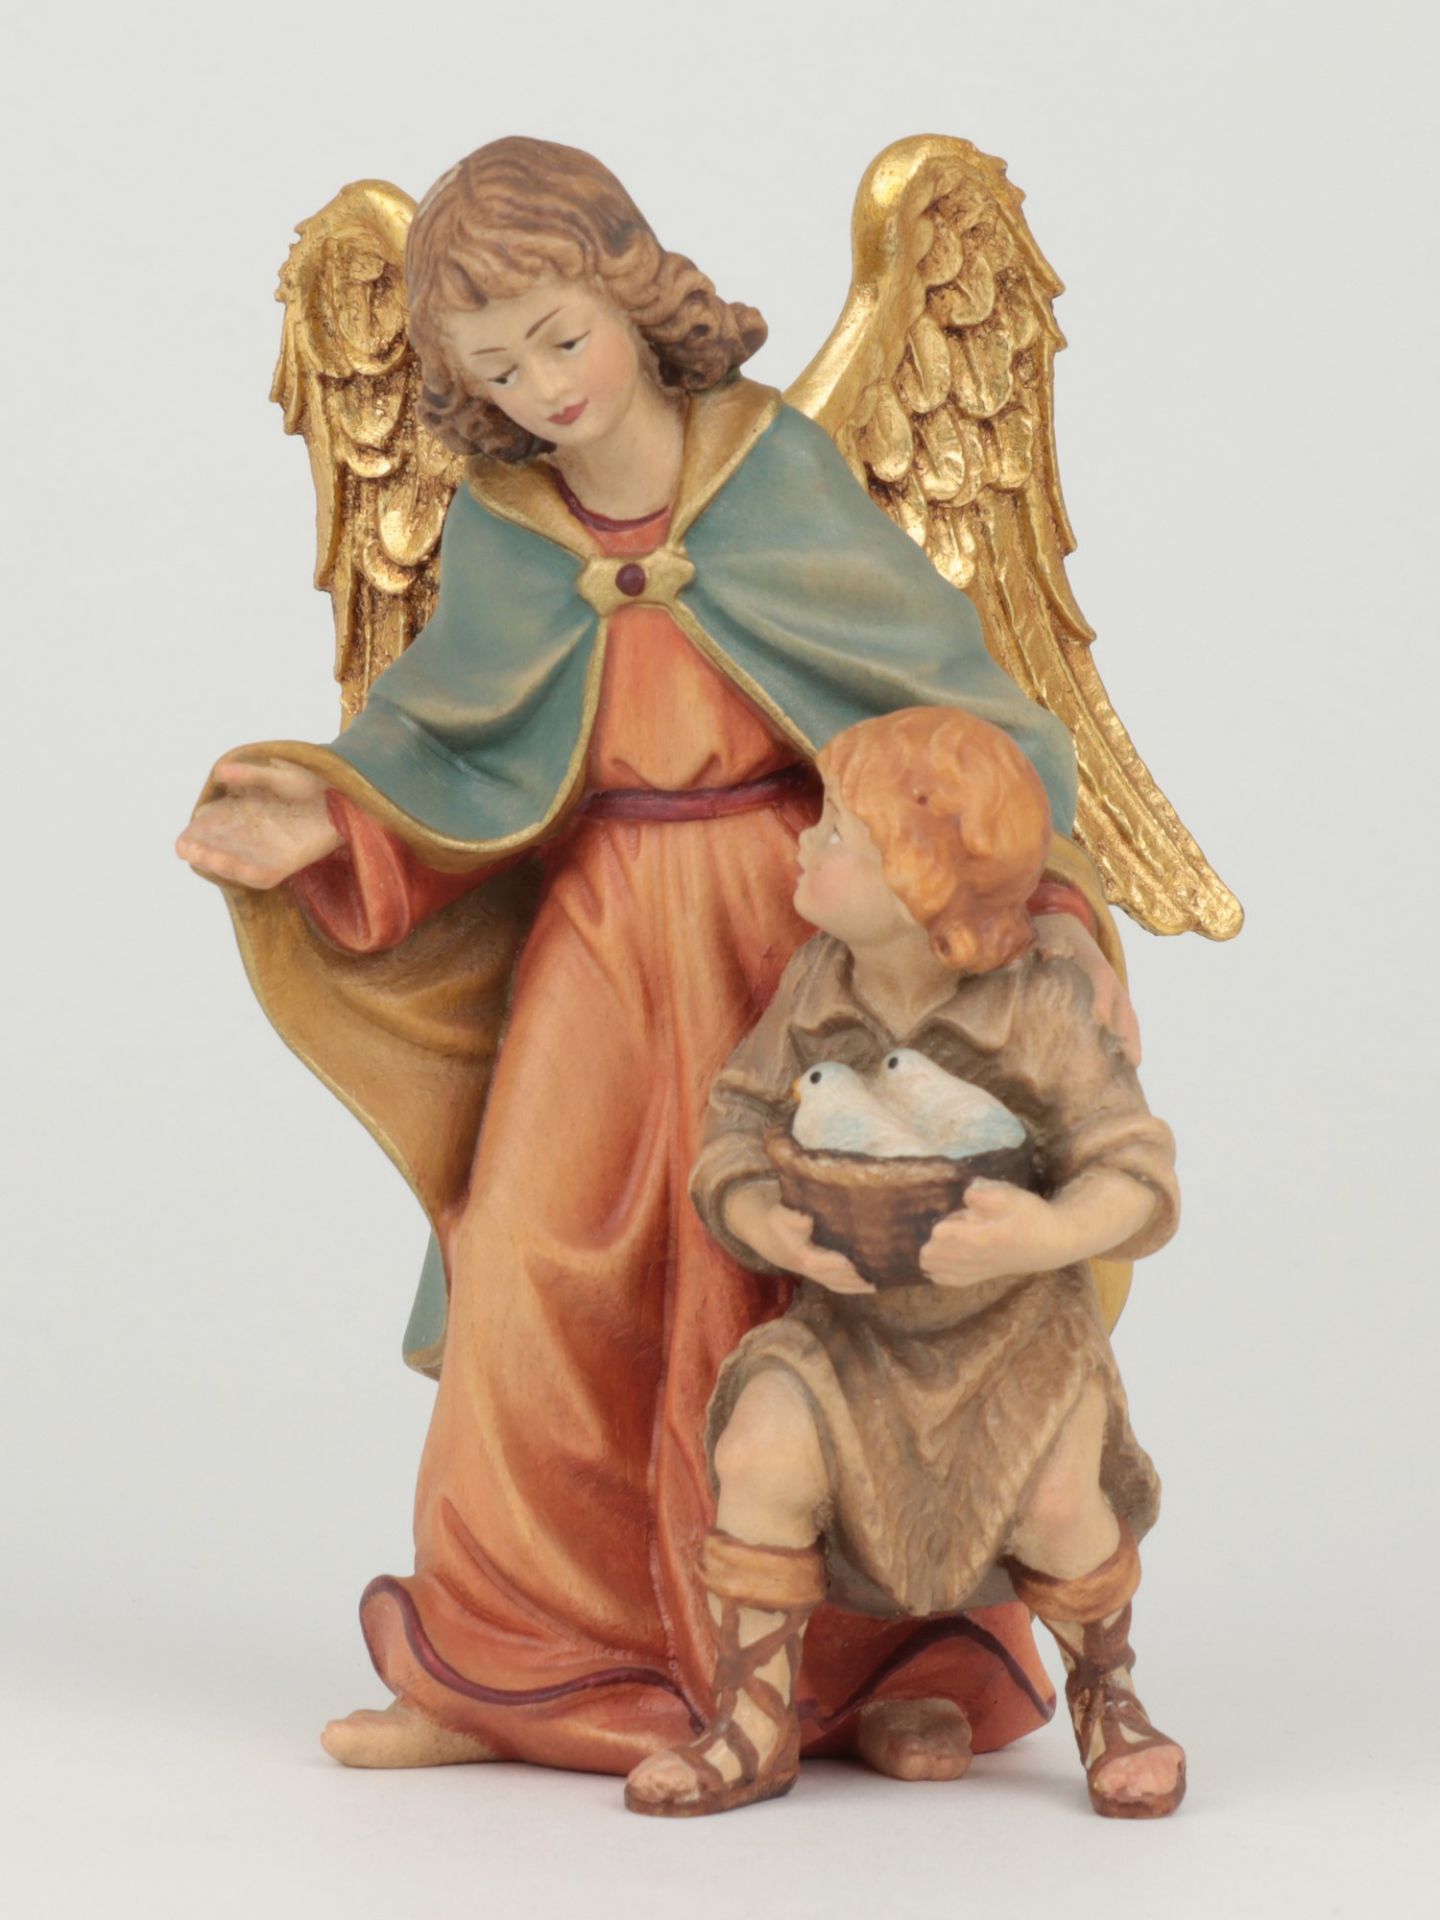 Krippenfigur - Südtirol Ewald Insam, Holz, geschnitzt, farbig bemalt, tlw. vergoldet, Engel mit